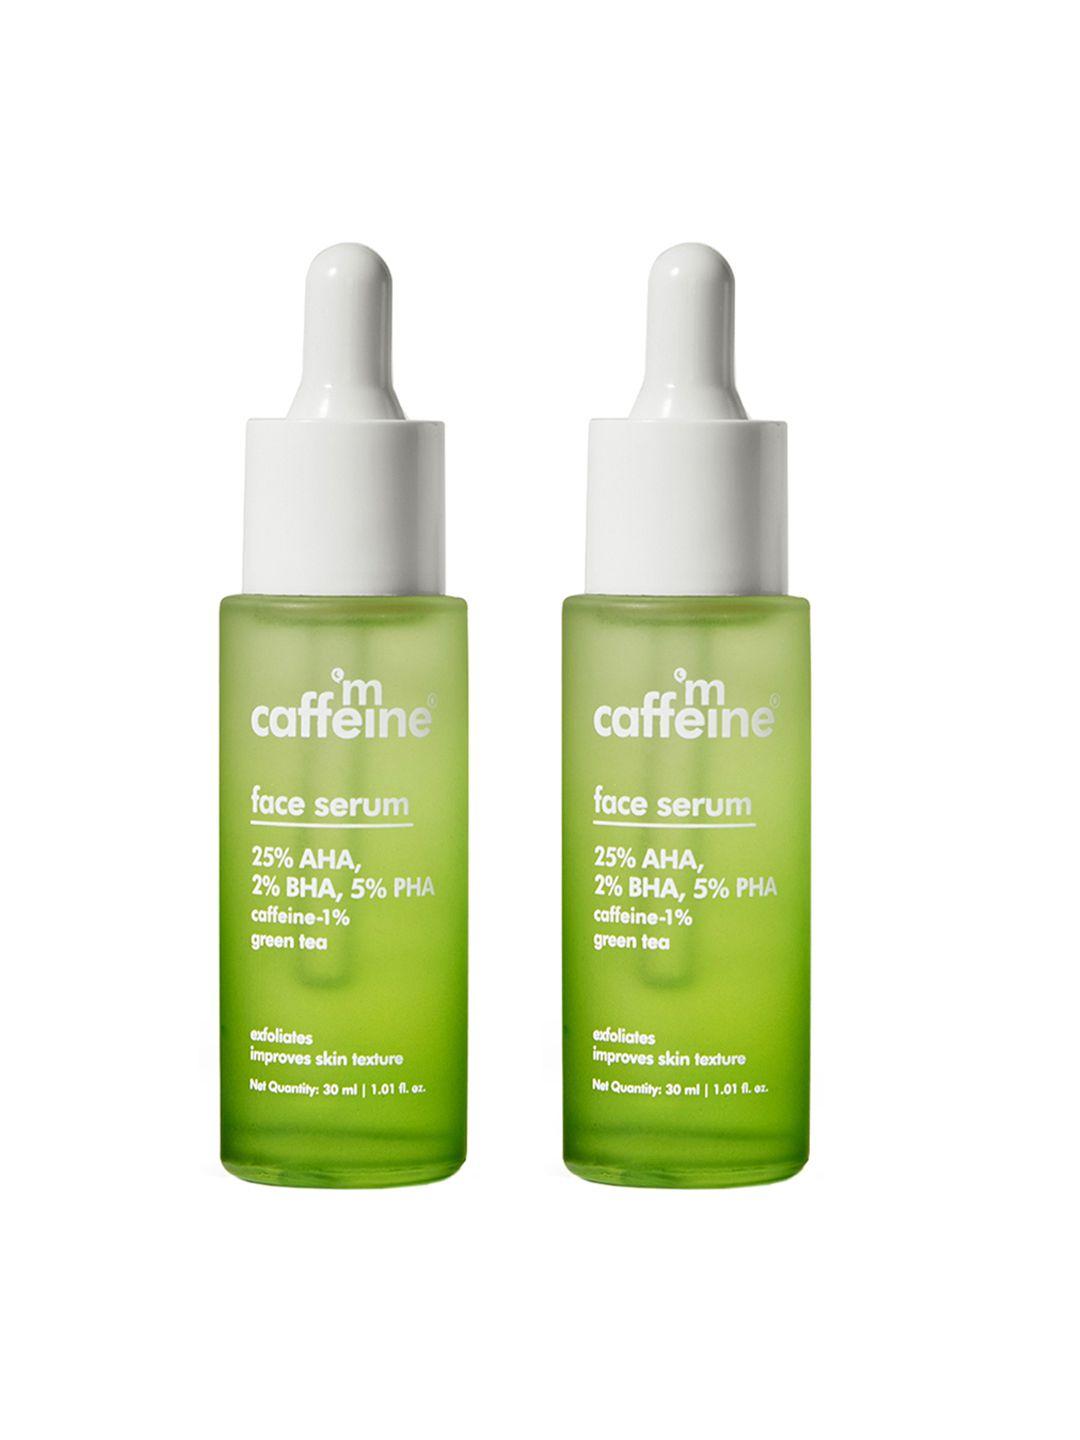 mcaffeine set of 2 green tea face serum with 25% aha, 2% bha, 5% pha - 30ml each